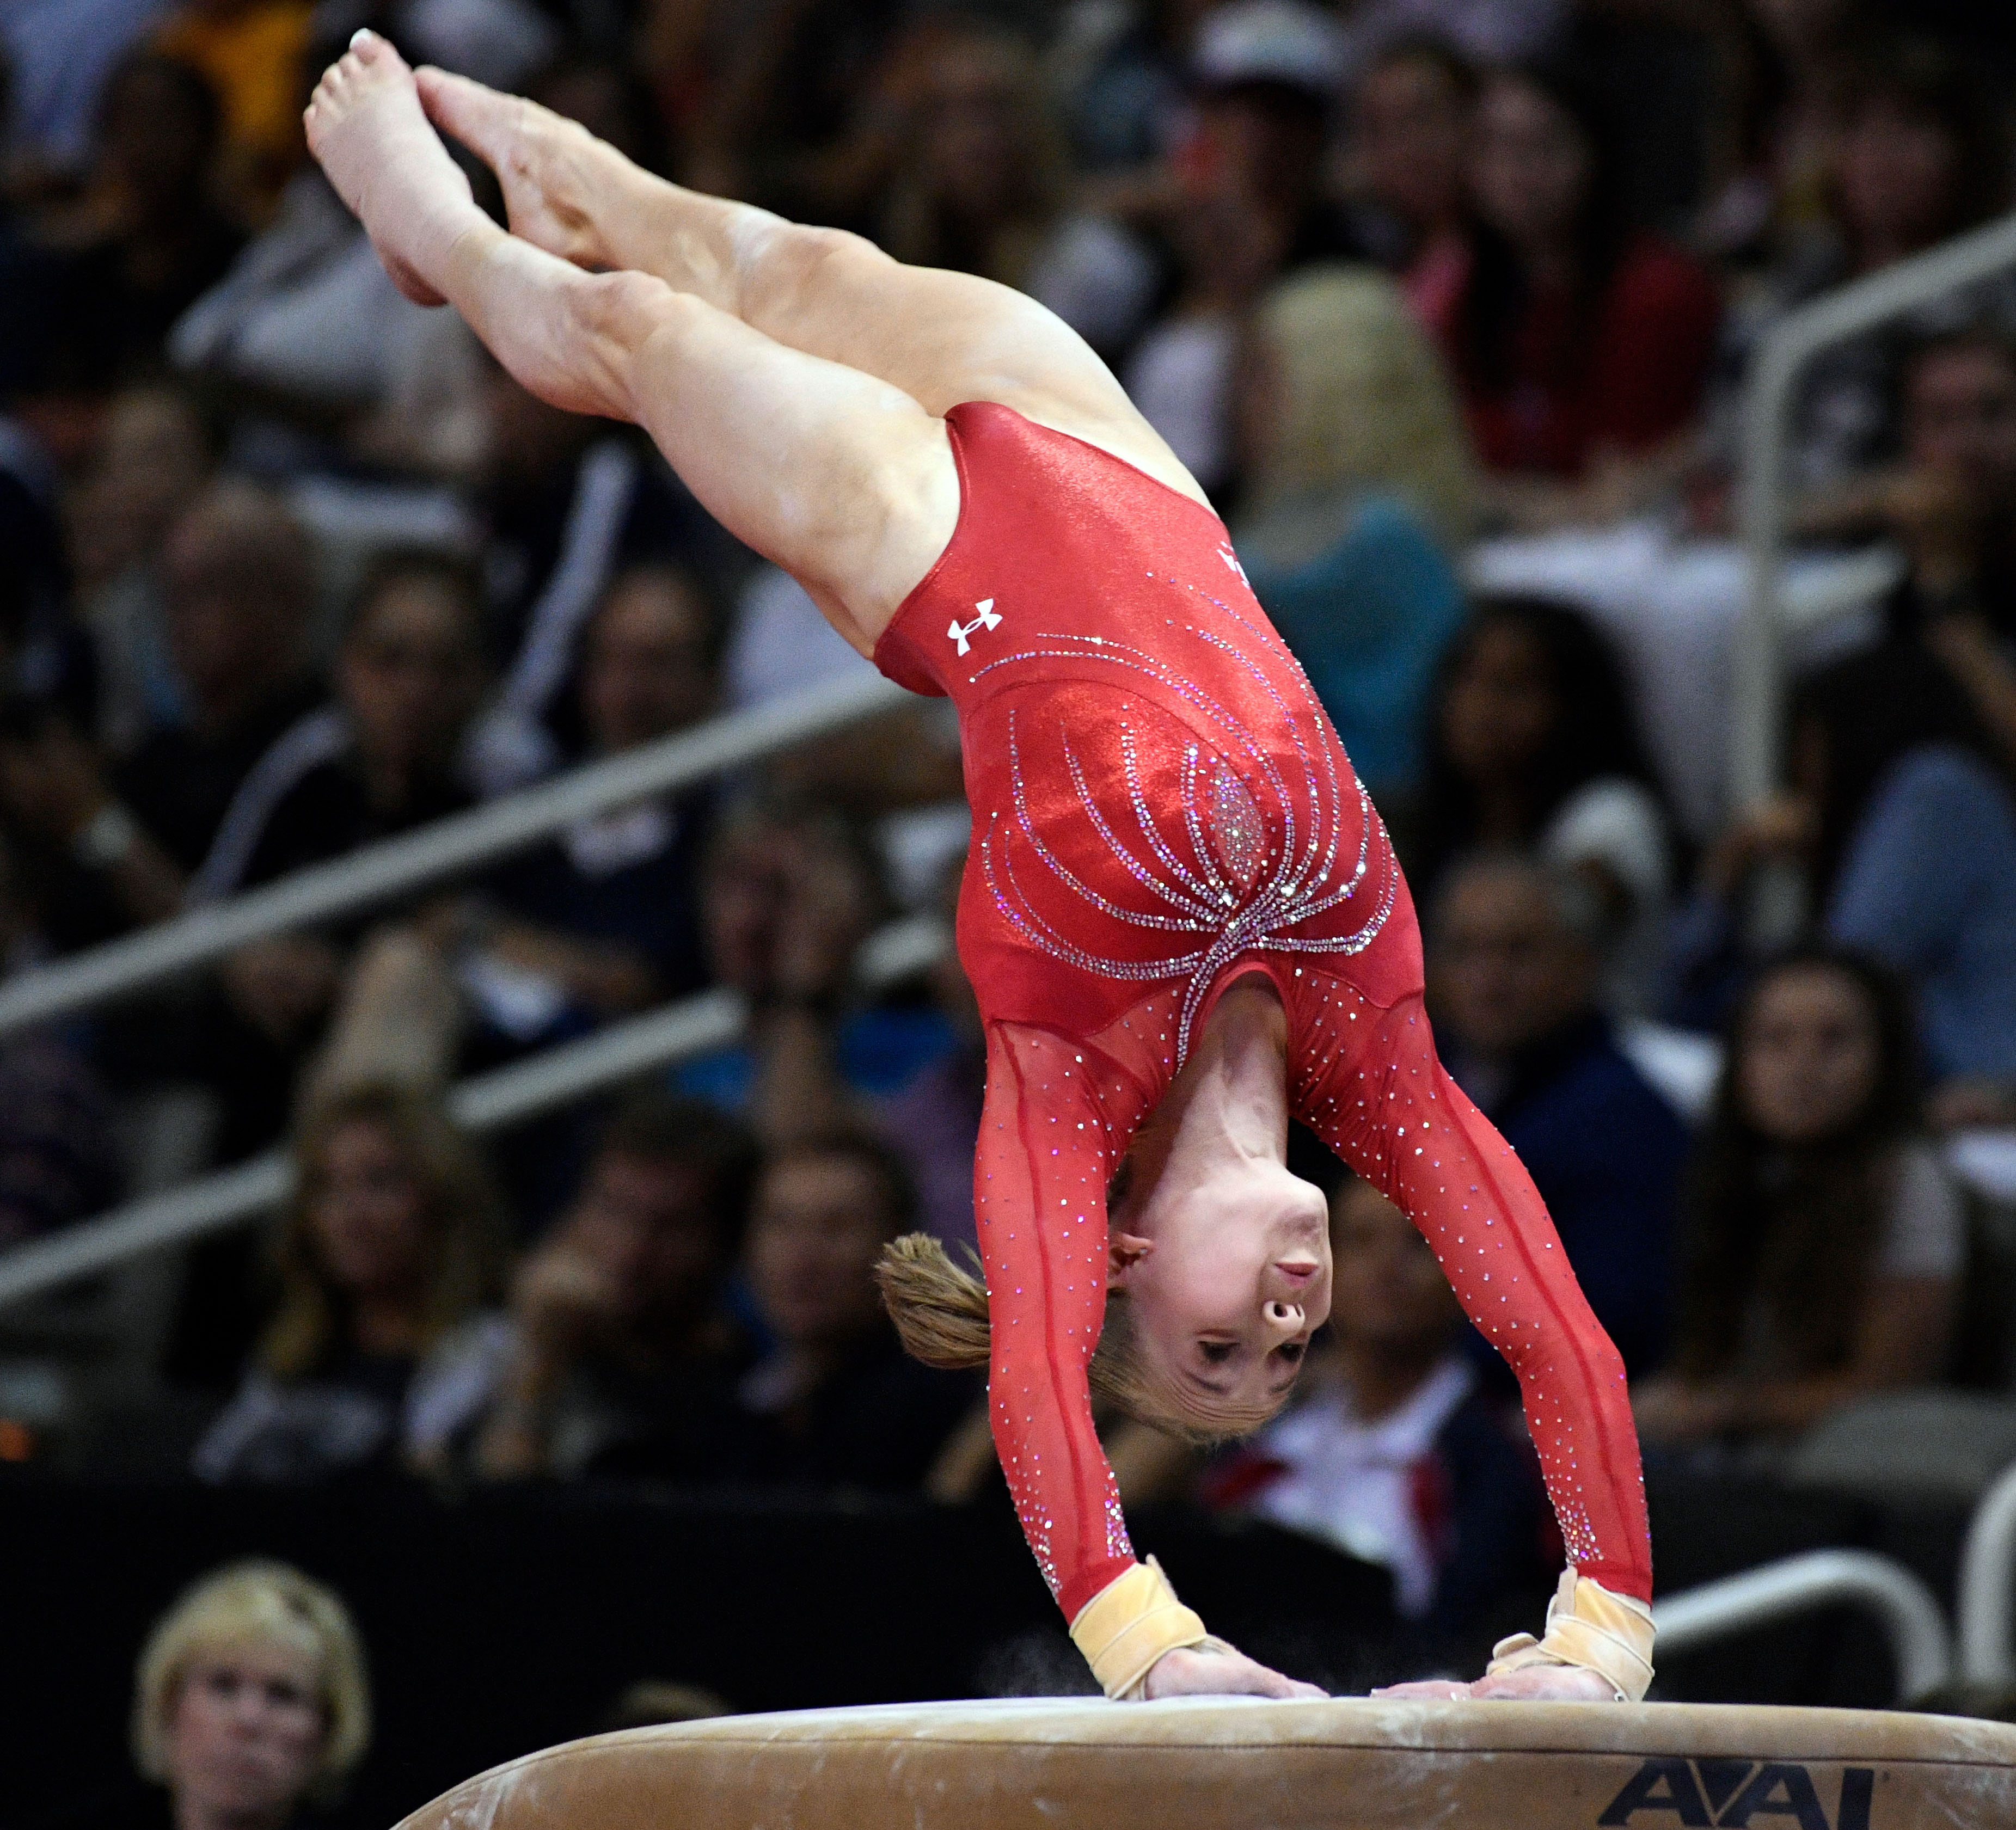 U.S. Olympic gymnastics hopefuls face drama on final day of trials for